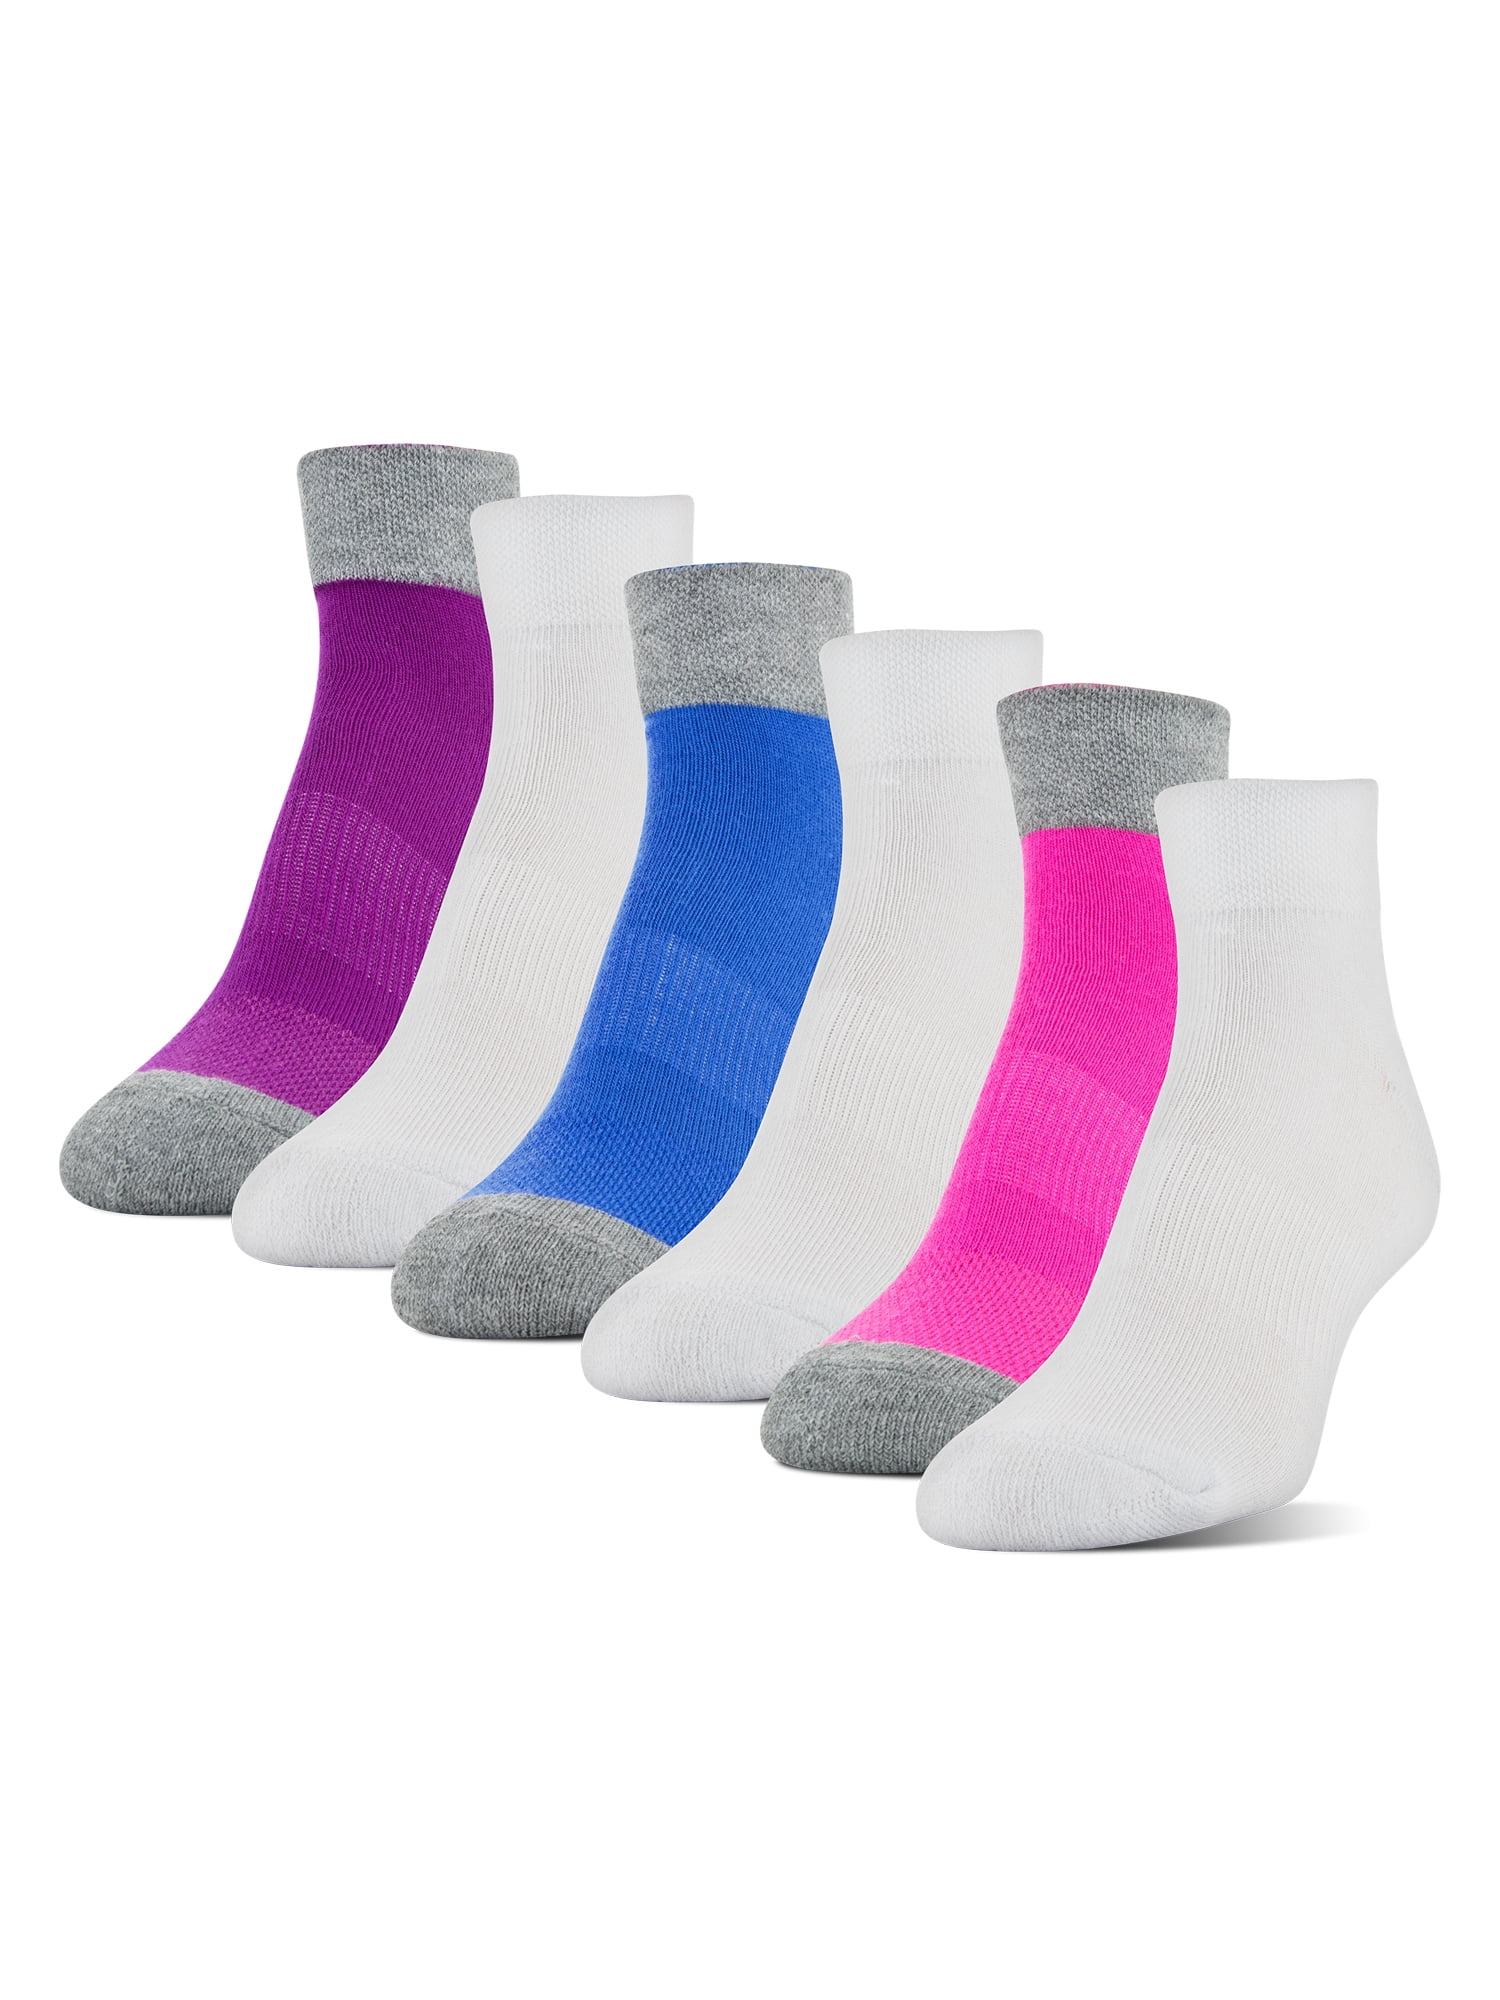 Athletic Works - Women's Midcushion Zone Cushion Low Cut Socks, 6 Pairs ...